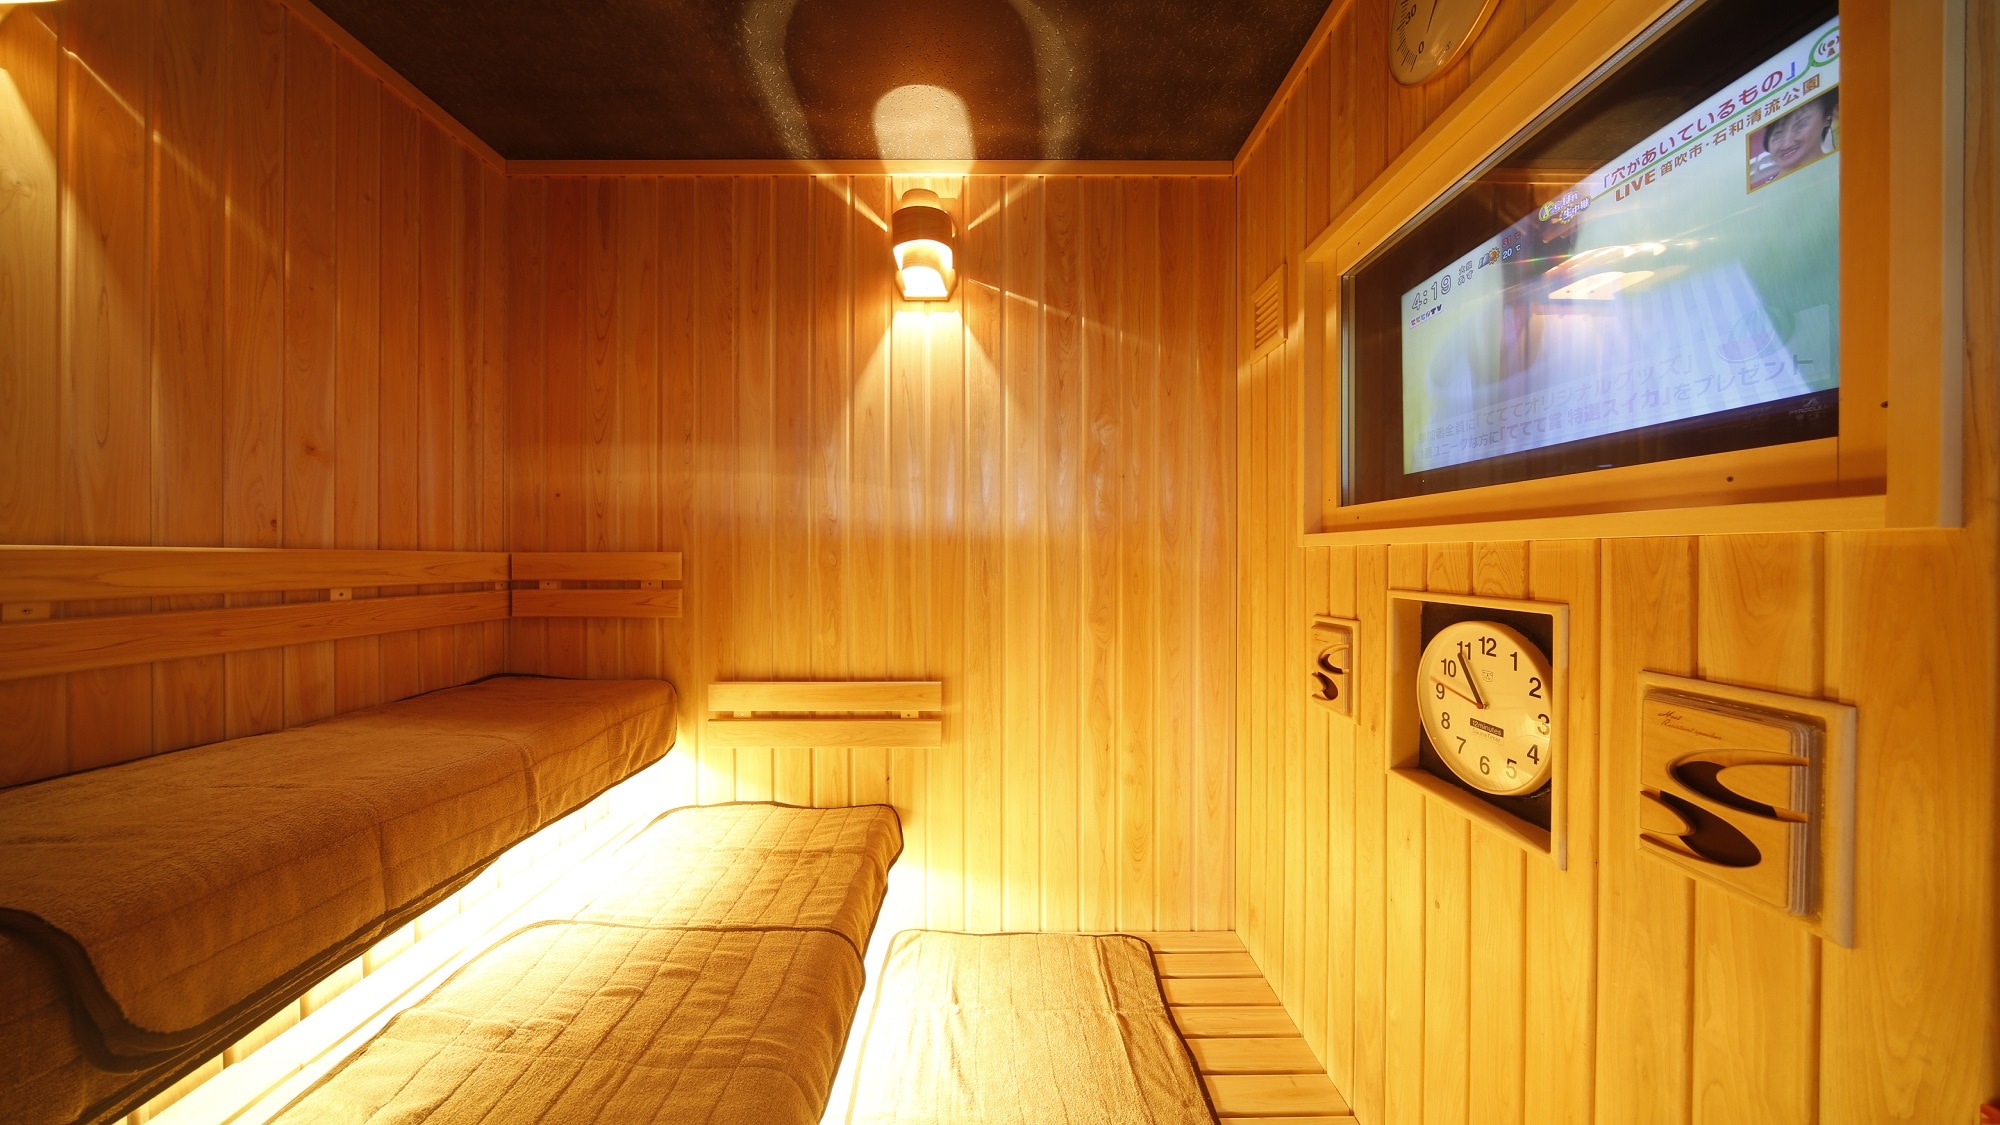 [Pria] Sauna 15:00 hingga 1:00 keesokan harinya, 5:00 hingga 10:00 (suhu kamar 96 ° C)